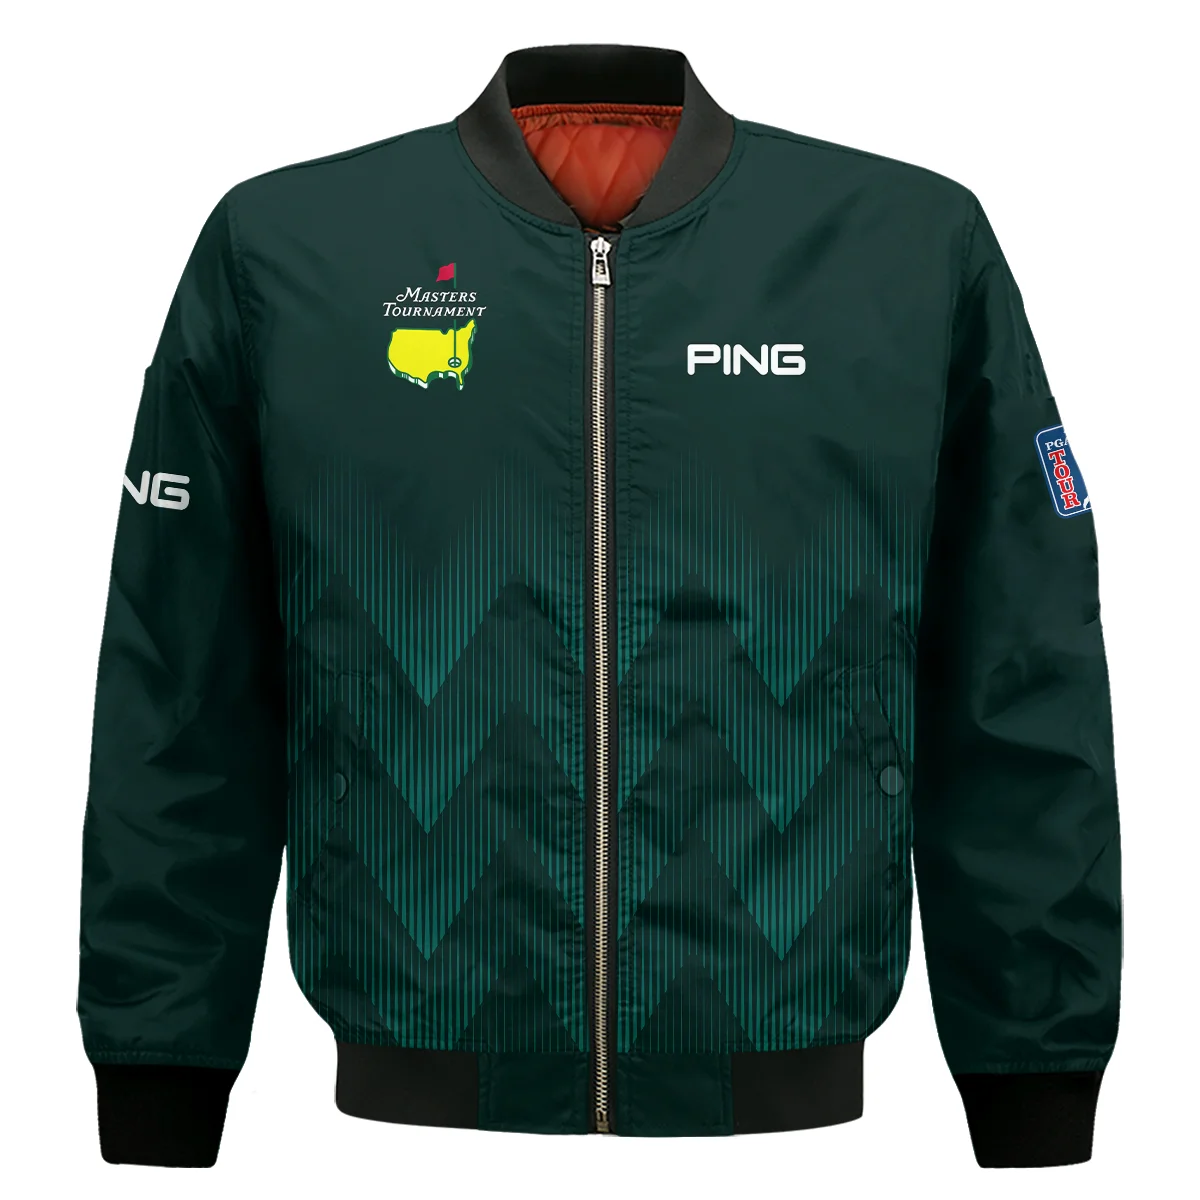 Masters Tournament Golf Ping Bomber Jacket Zigzag Pattern Dark Green Golf Sports Bomber Jacket GBJ1309